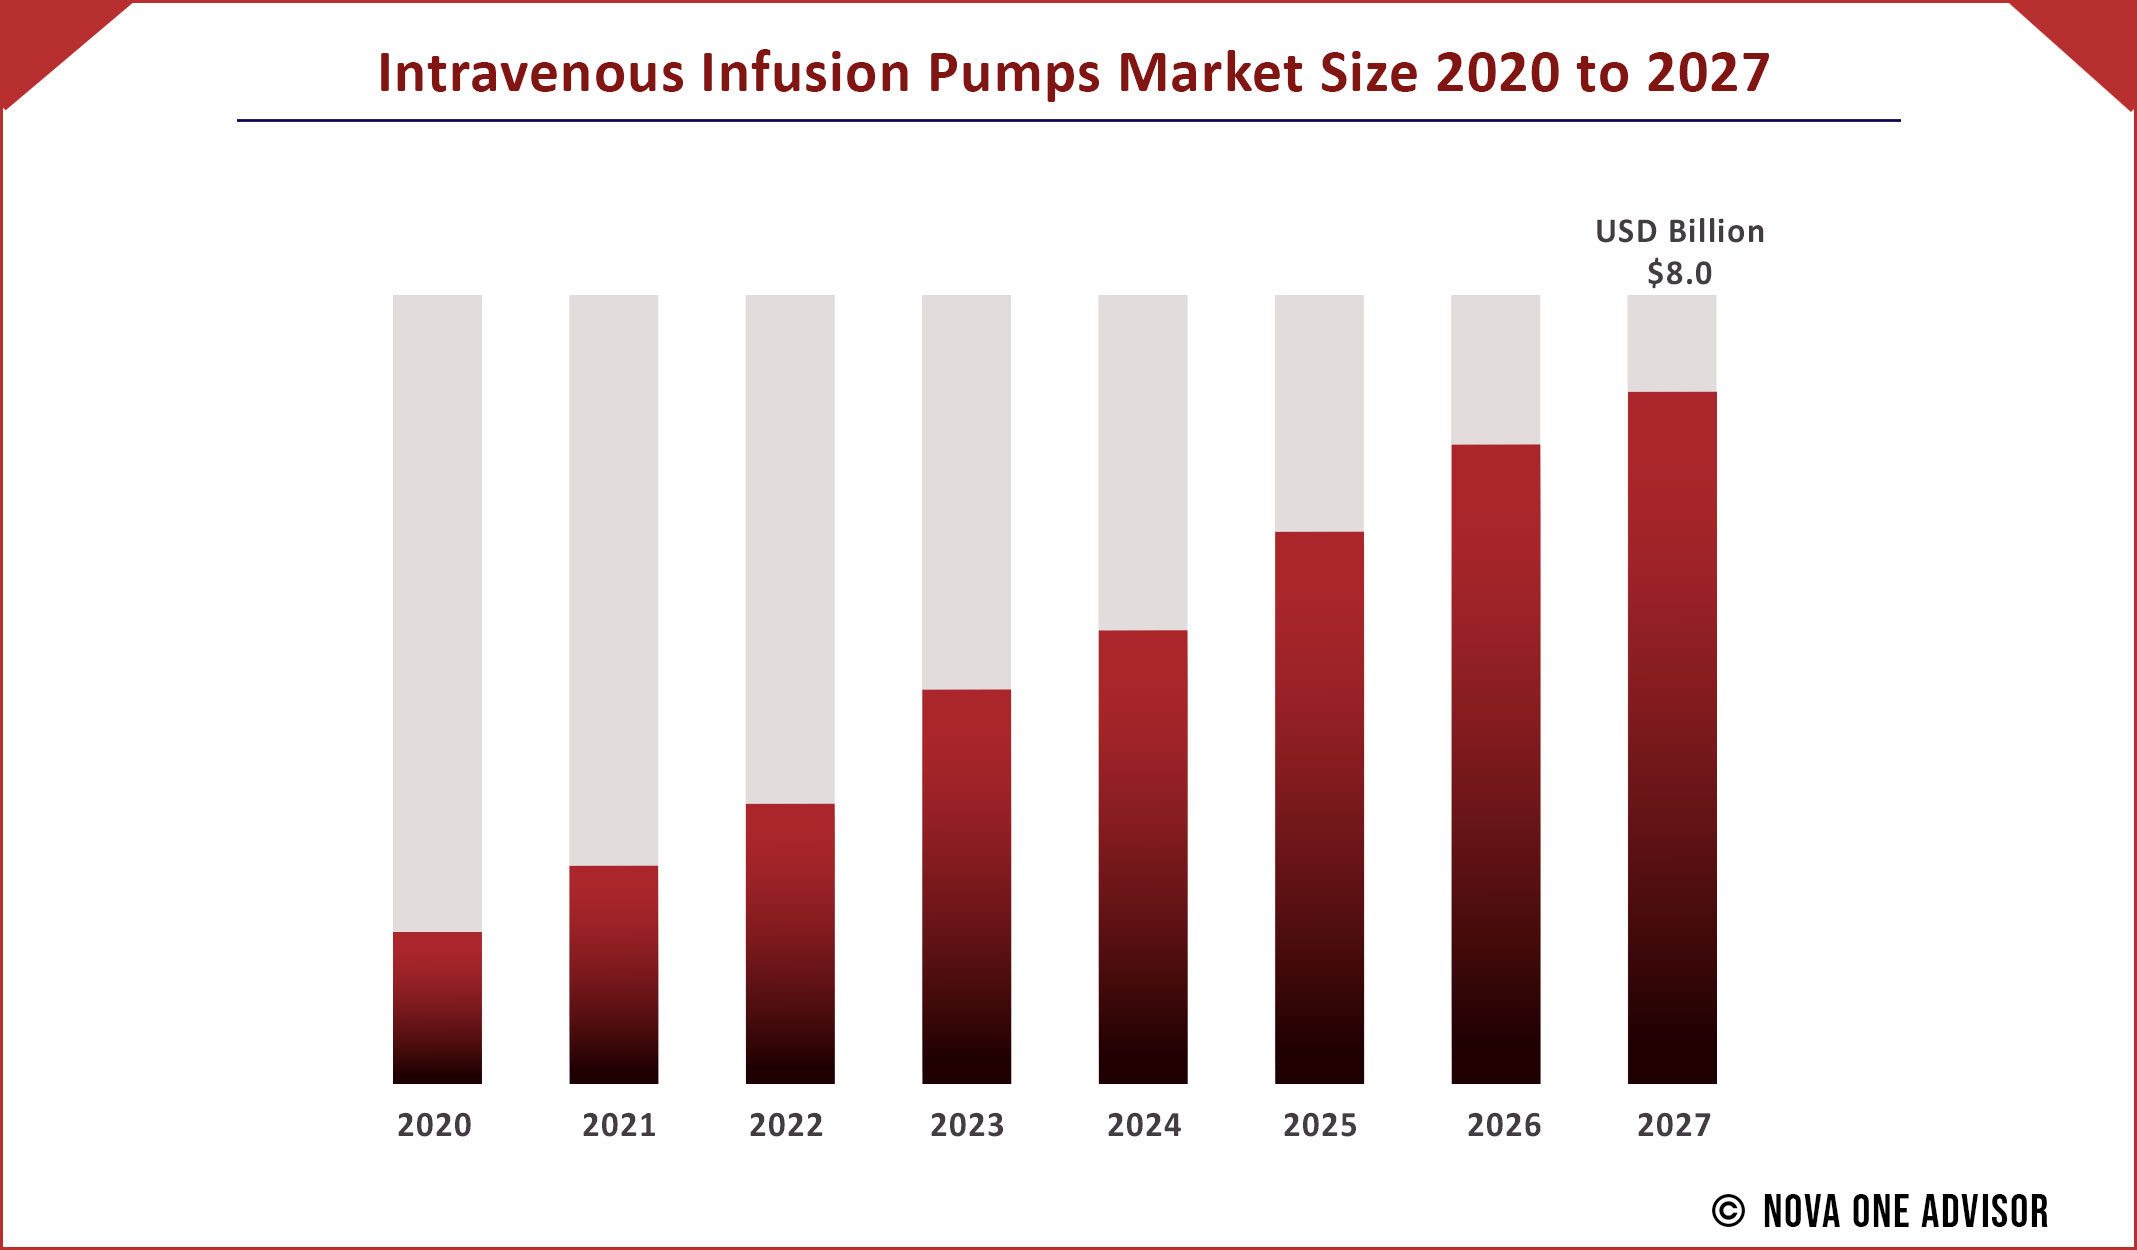 Intravenous Infusion Pumps Market Size 2020 to 2027